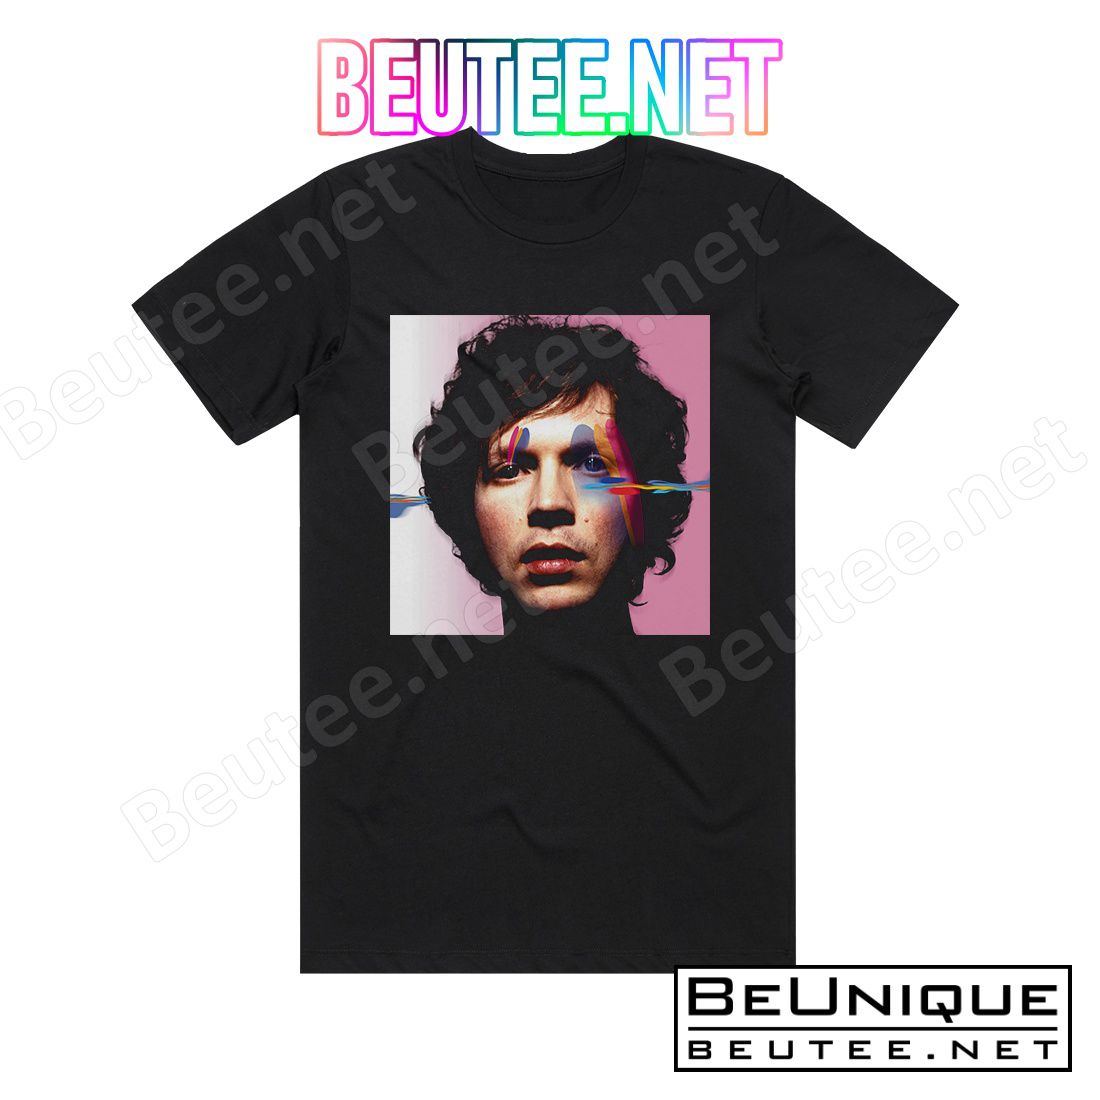 Beck Sea Change 1 Album Cover T-Shirt